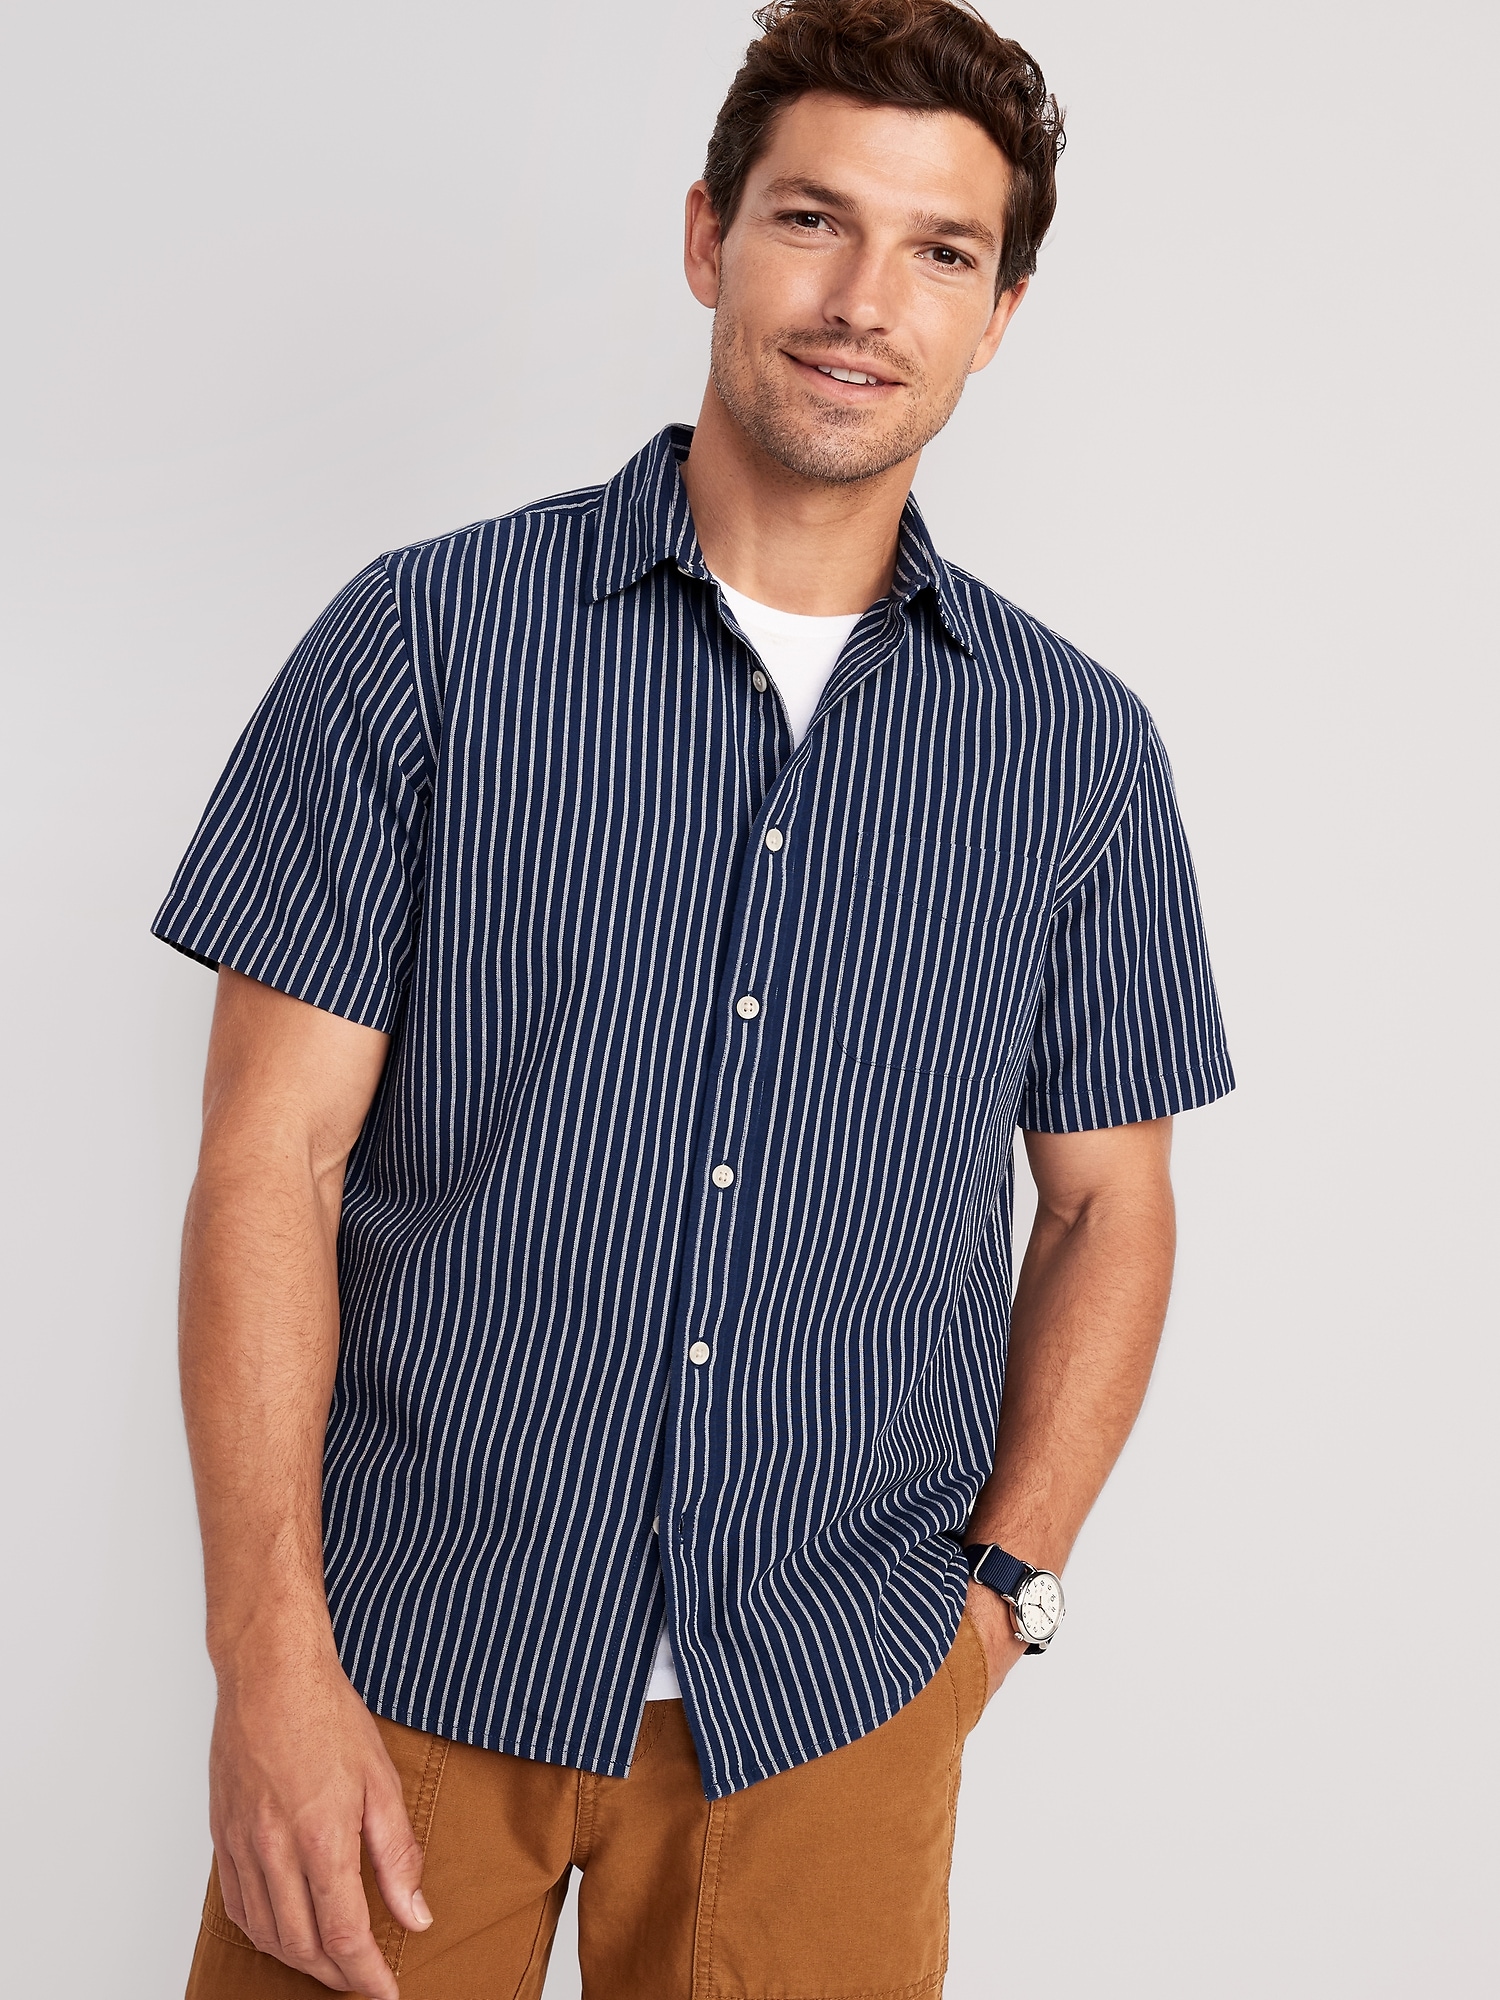 Regular-Fit Everyday Short-Sleeve Oxford Shirt for Men | Old Navy